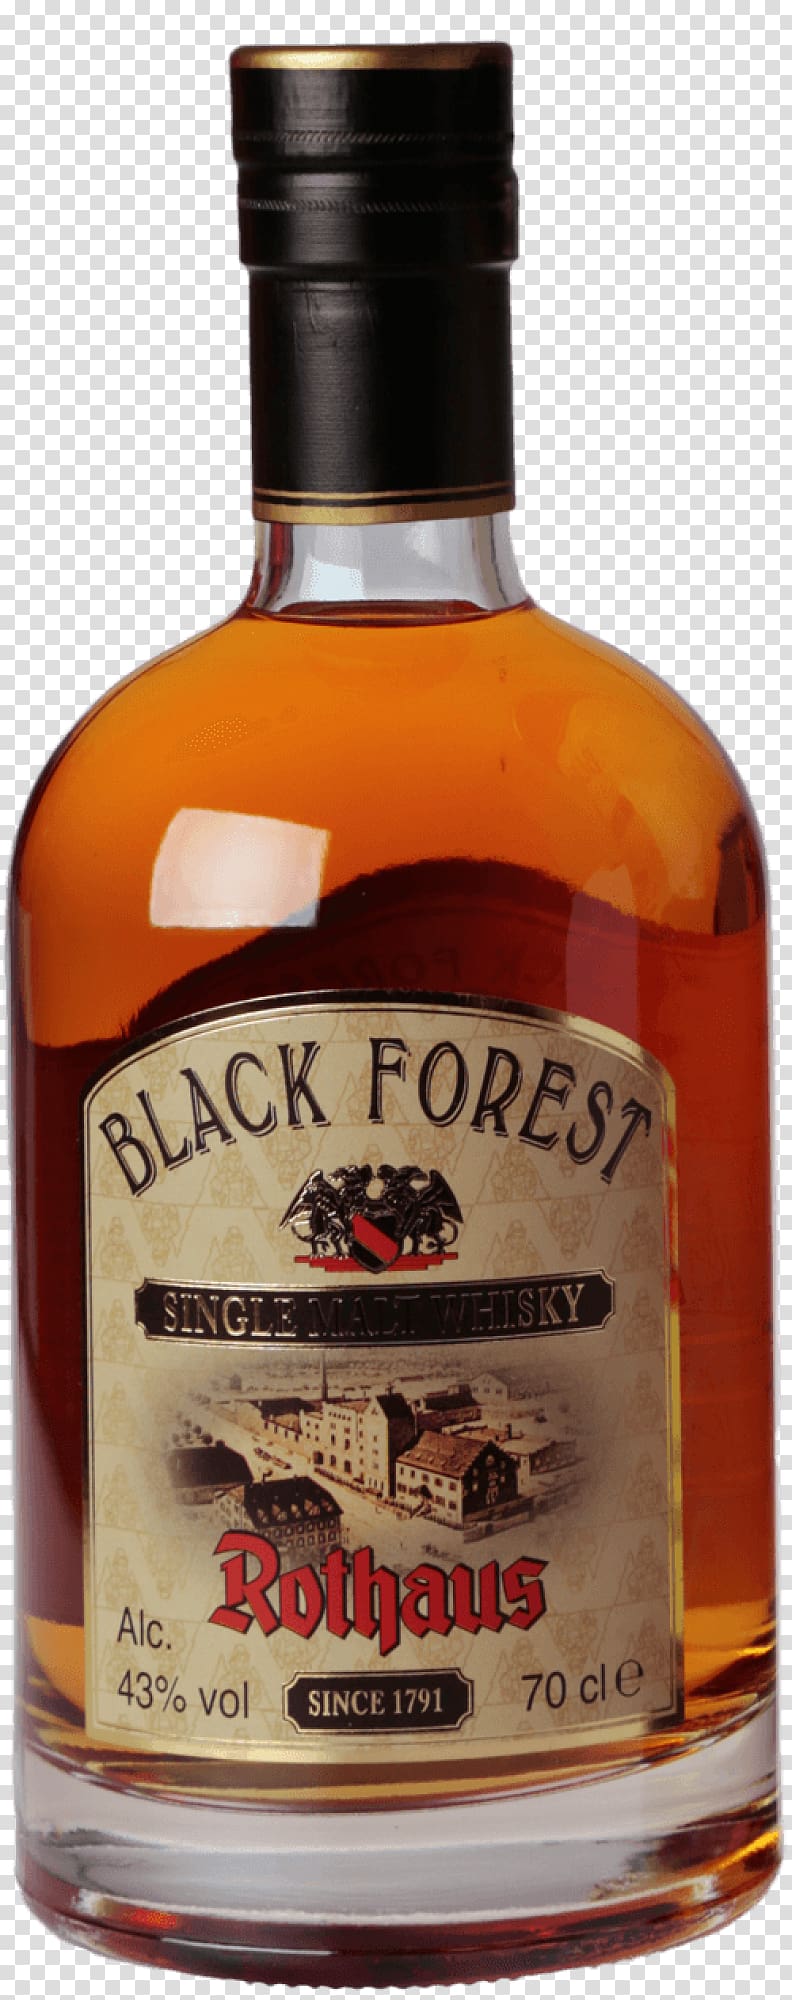 Buffalo Trace Distillery Bourbon whiskey Distilled beverage Basil Hayden's, wine transparent background PNG clipart